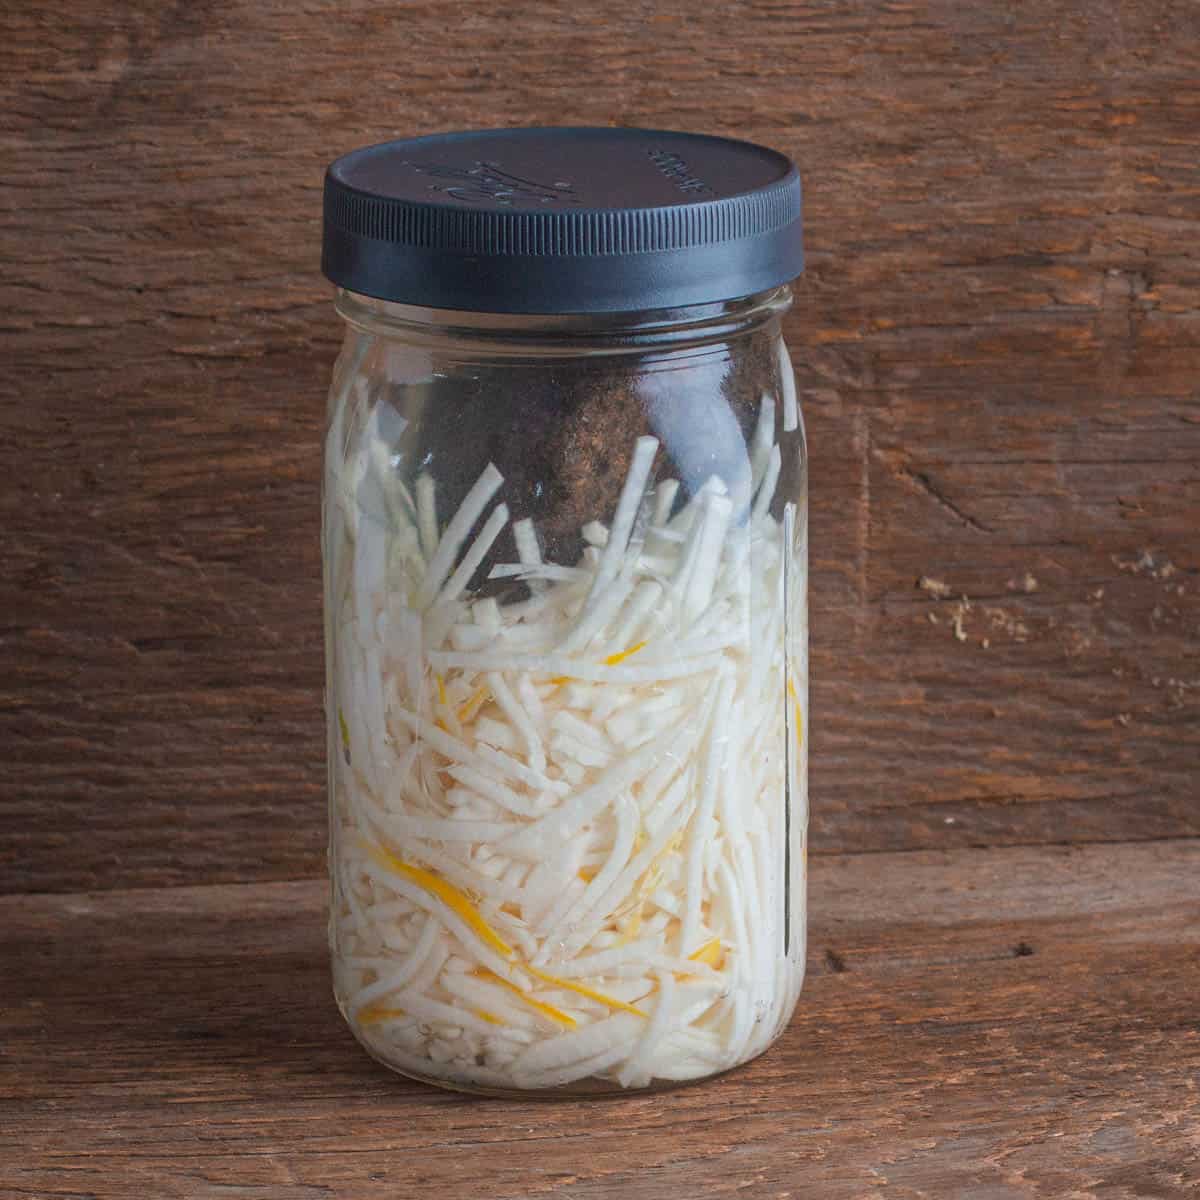 turnips fermenting in brine in a mason jar with a plastic lid